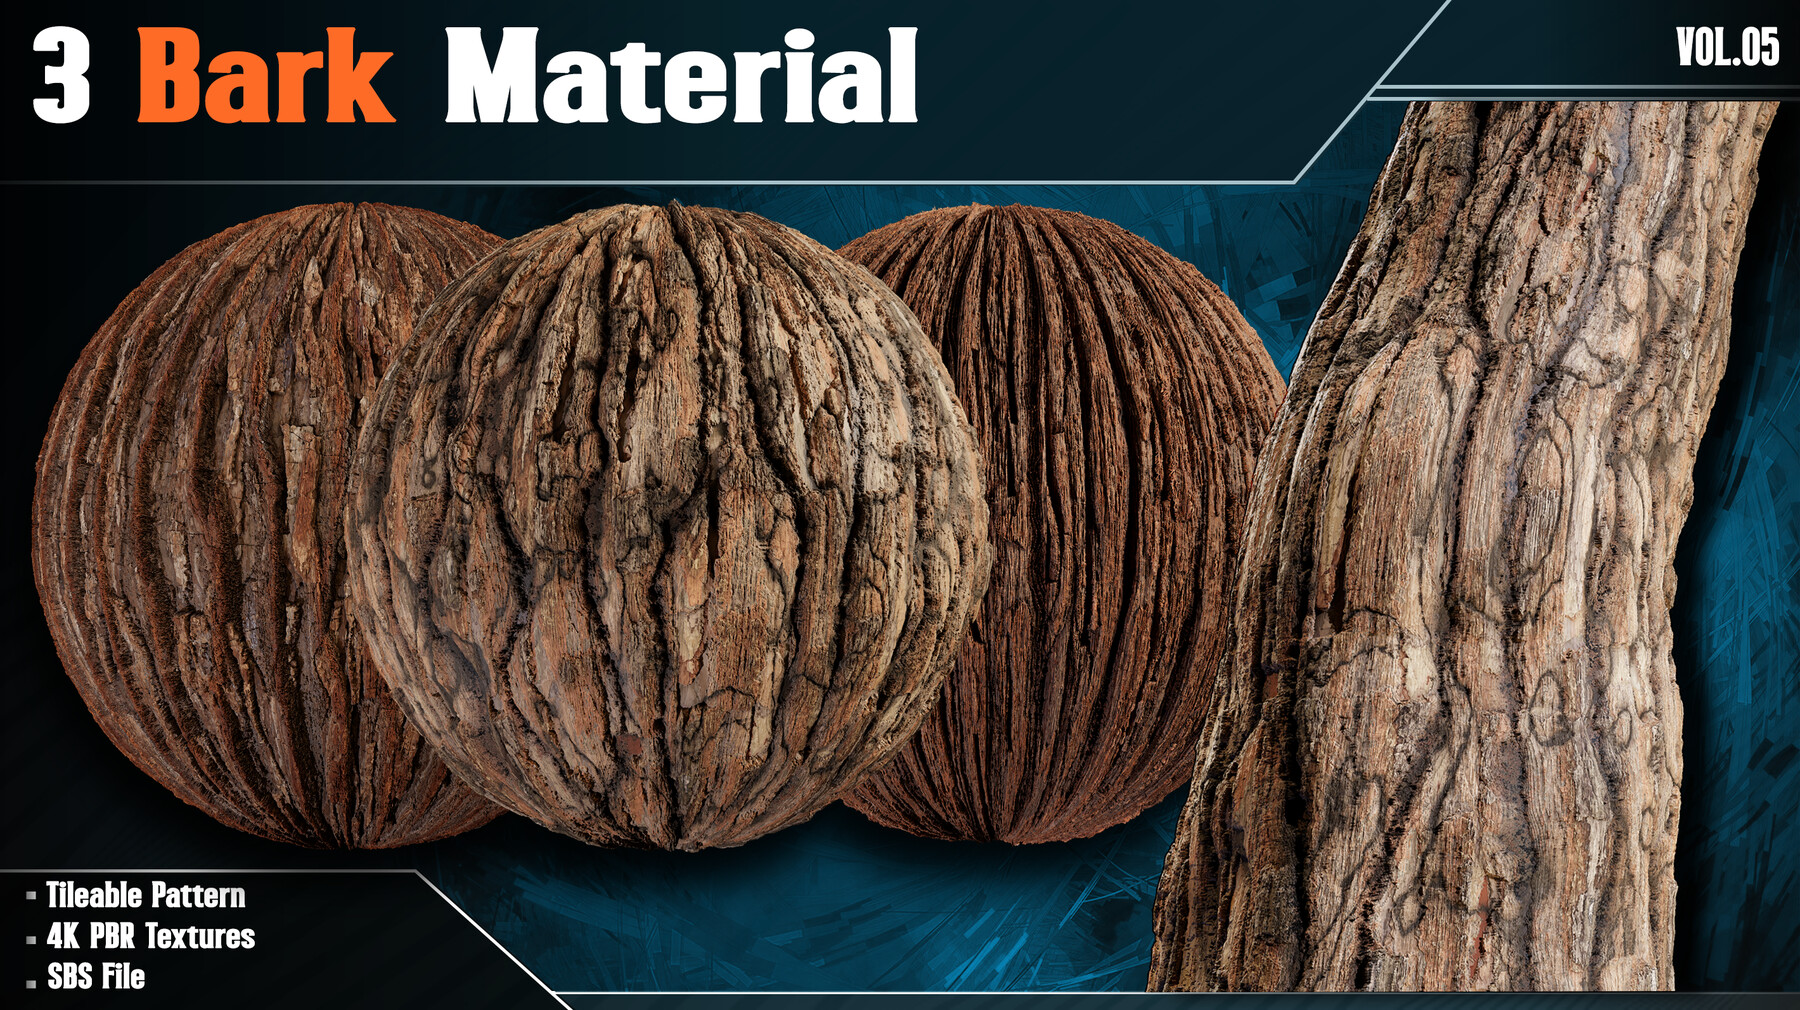 4k Pine Bark Material 03 Texture